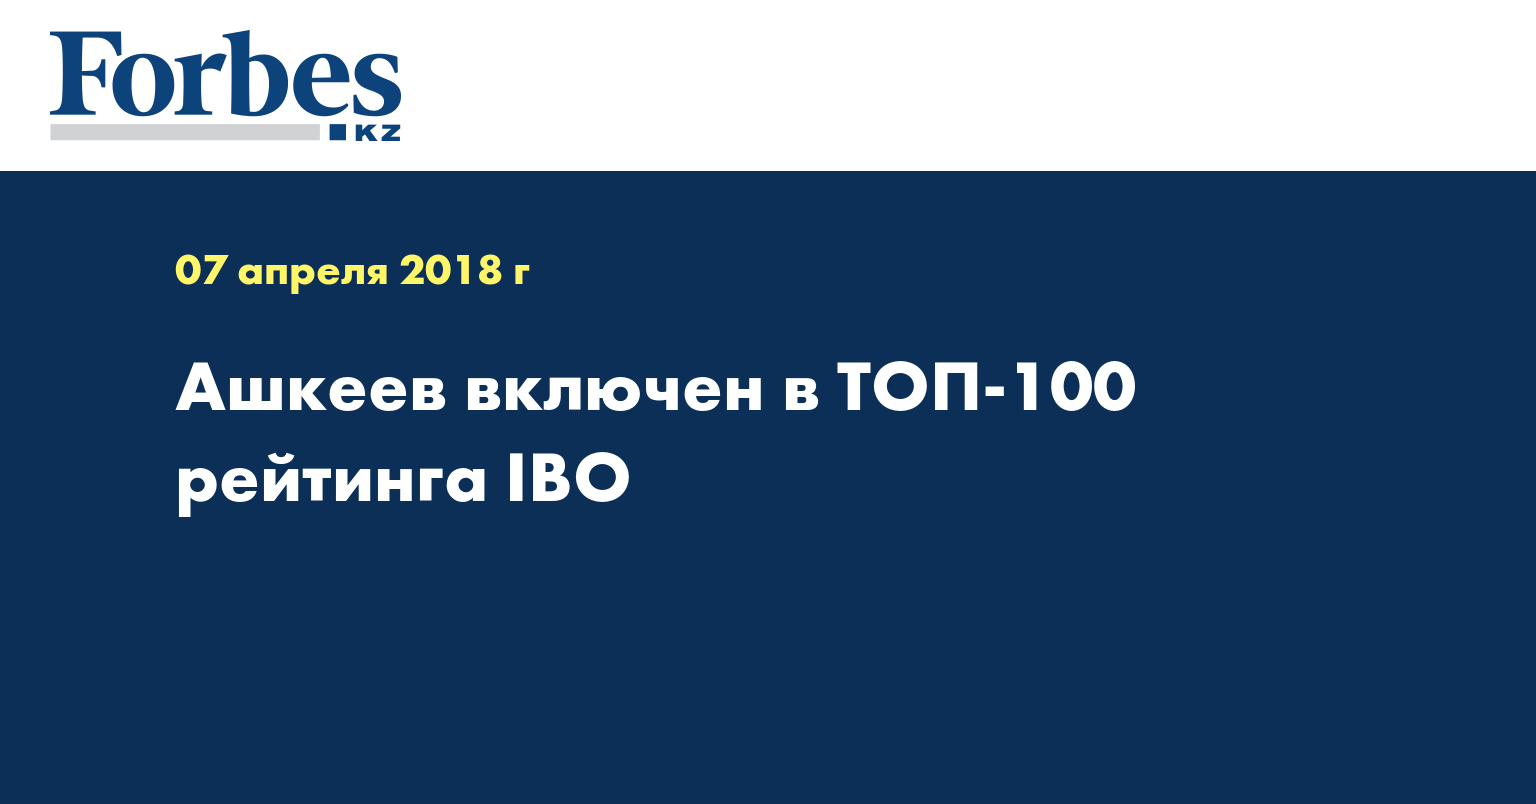 Ашкеев включен в ТОП-100 рейтинга IBO  